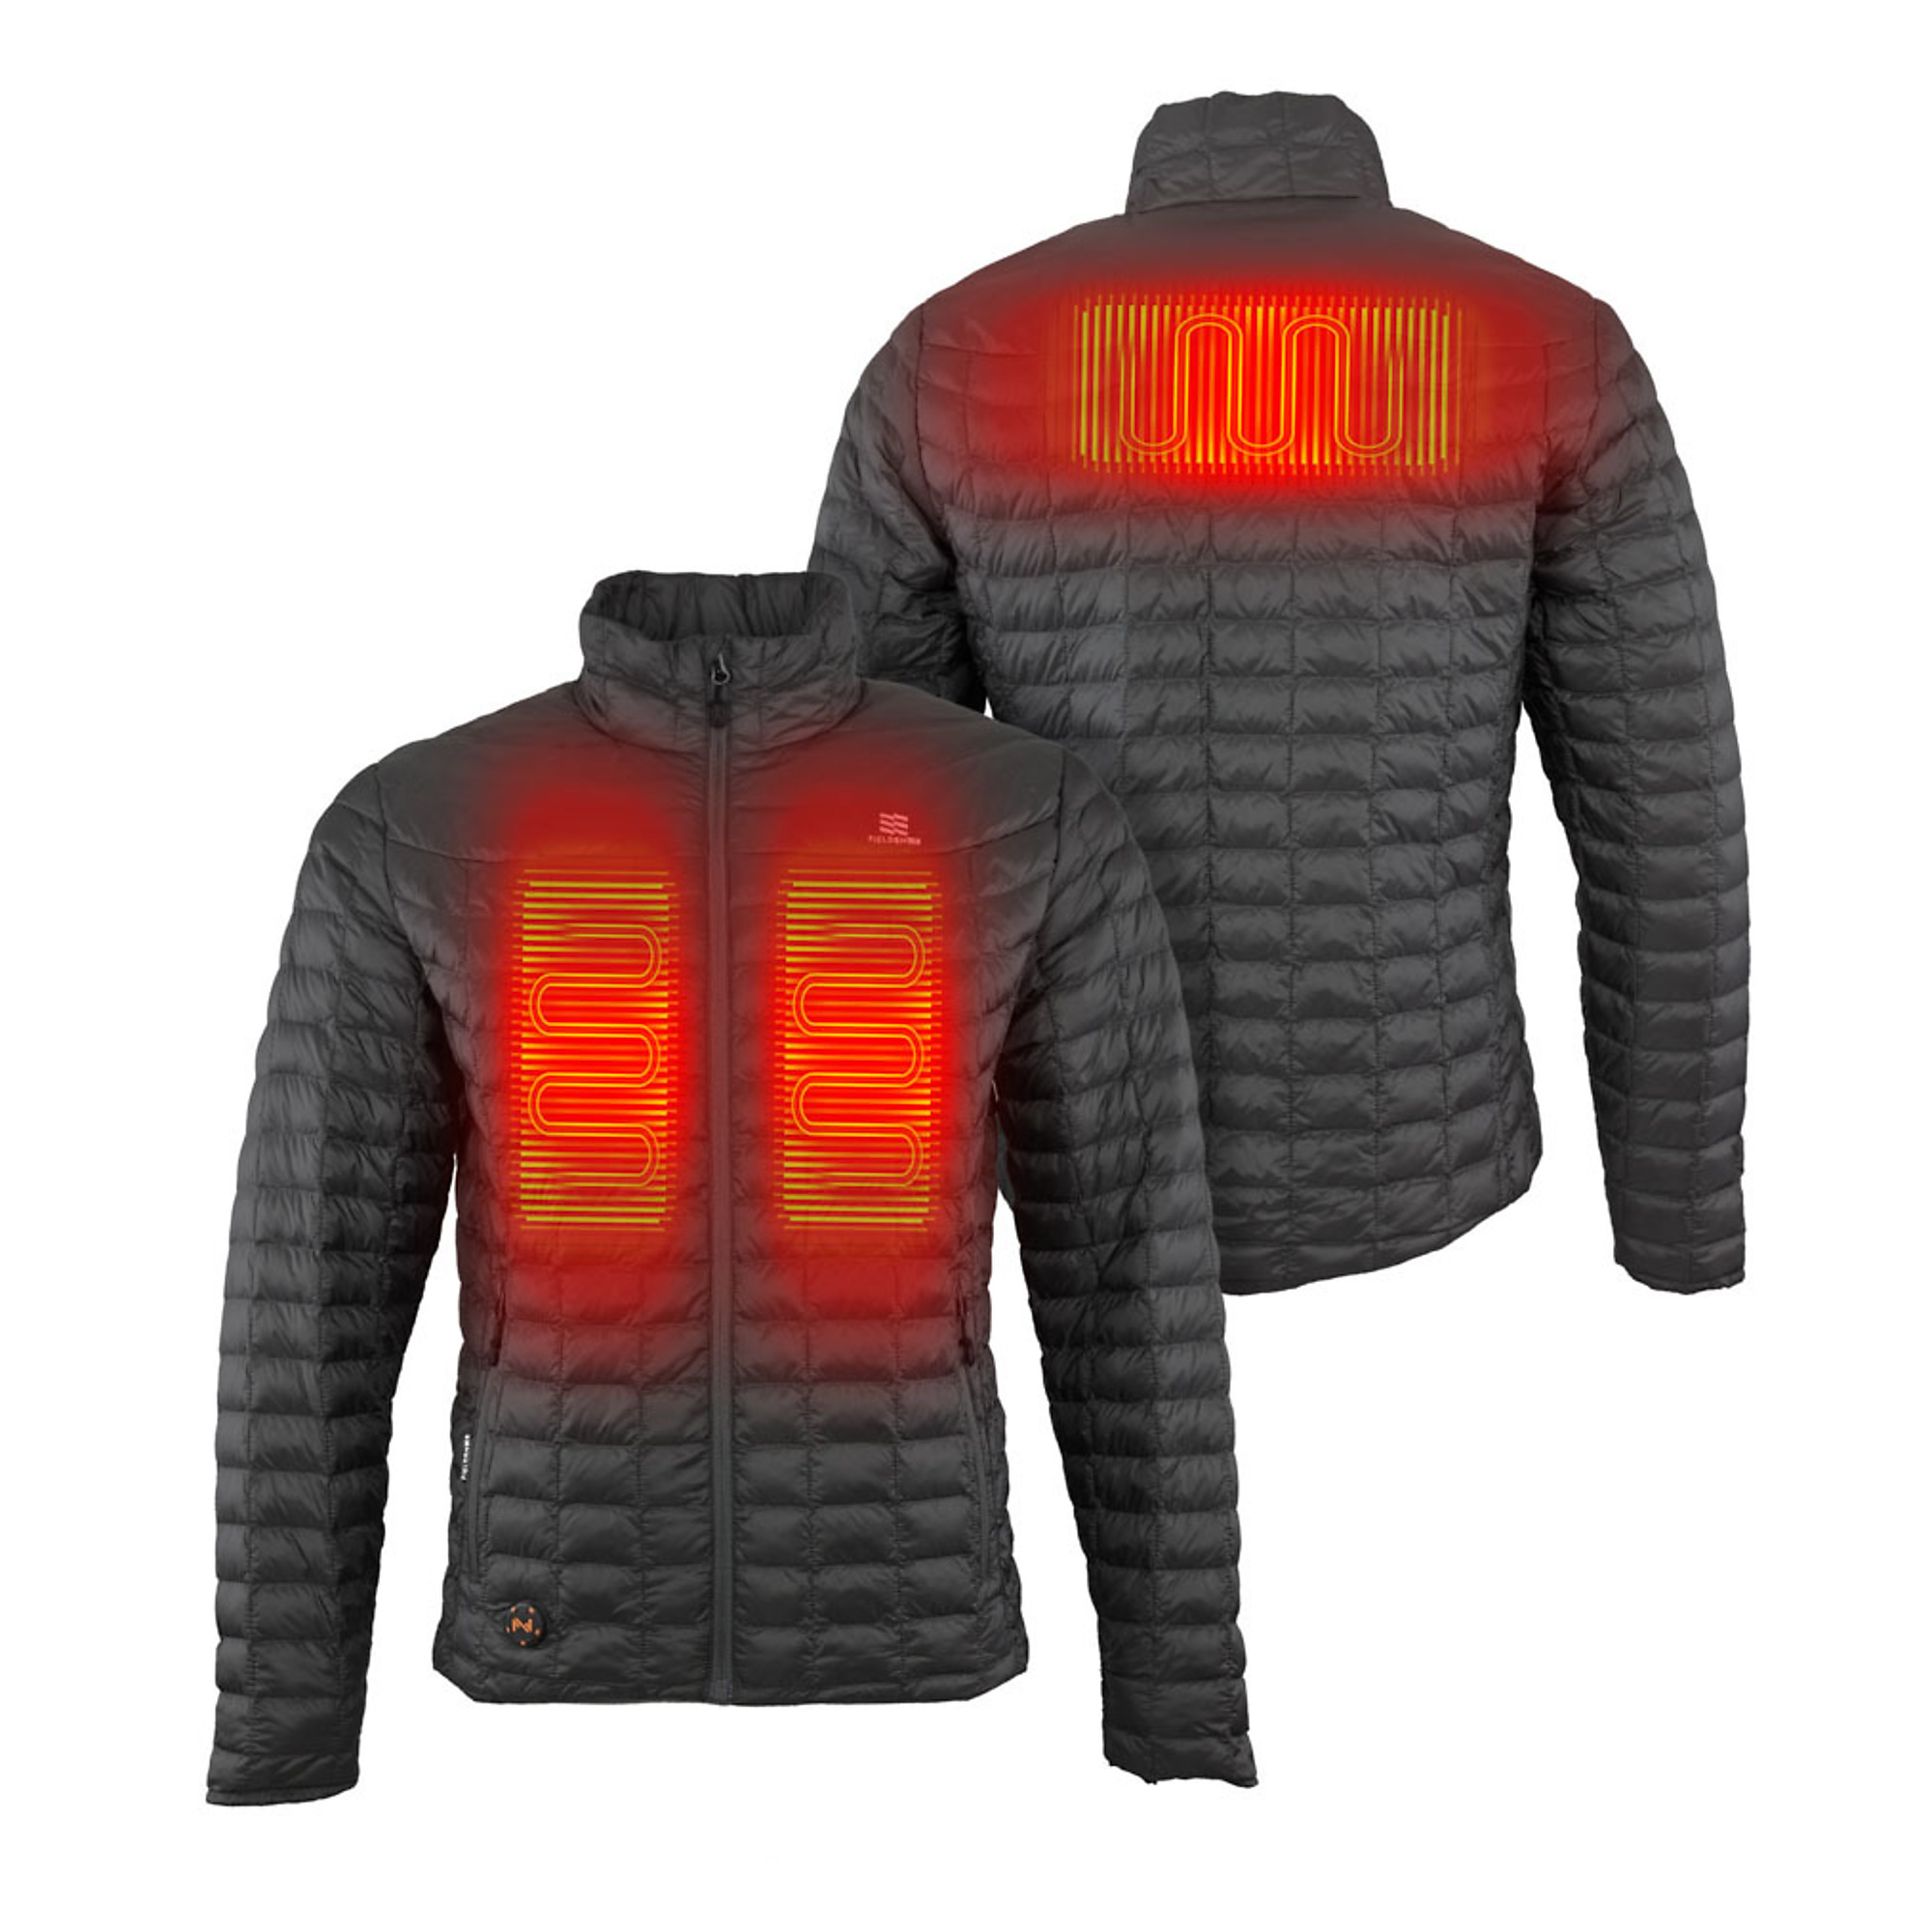 Fieldsheer, Men's Backcountry Heated Jacket with 7.4v Battery, Size L, Color Black, Model MWMJ04010420